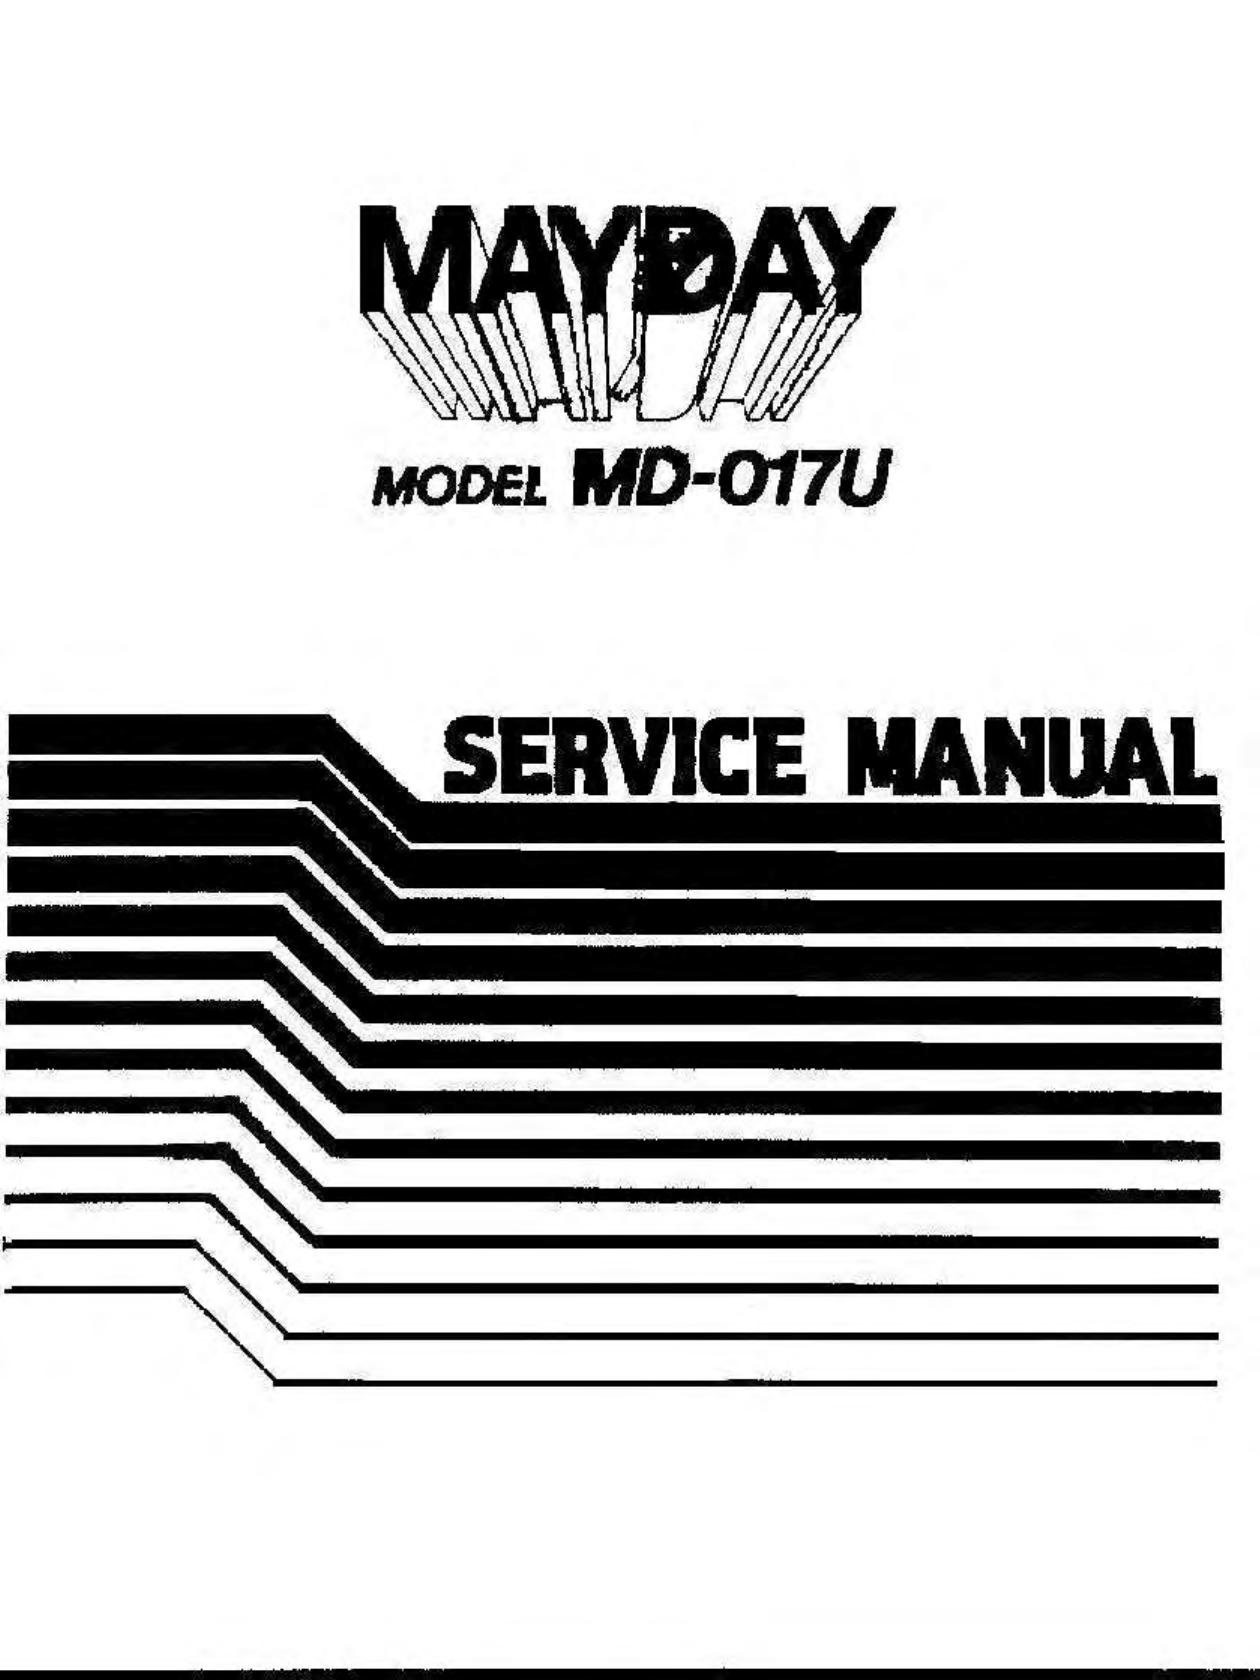 Mayday Service Manual (MD-017U)